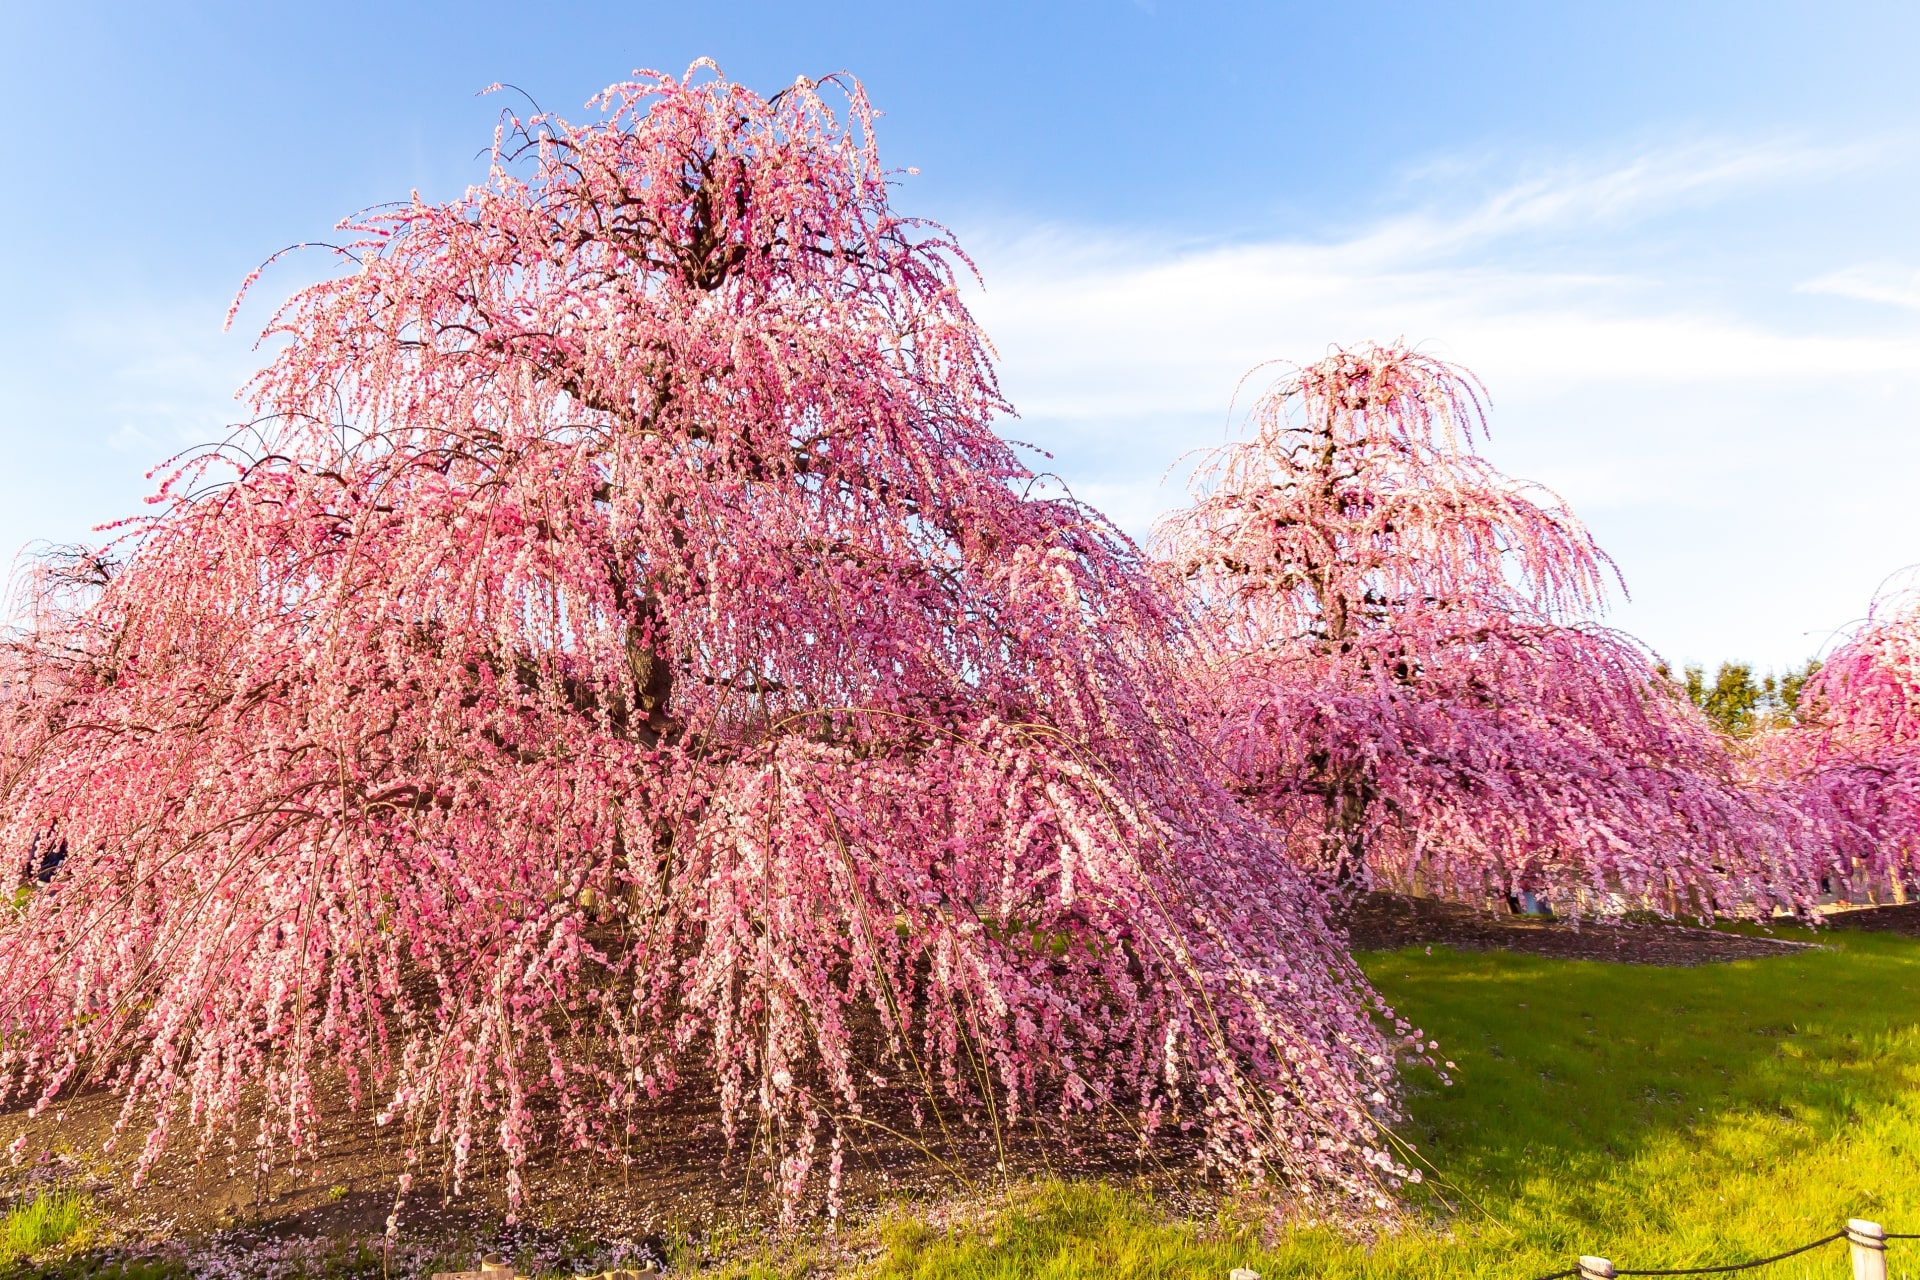 Suzuka Forest Garden Plum Blossom Festival 2020